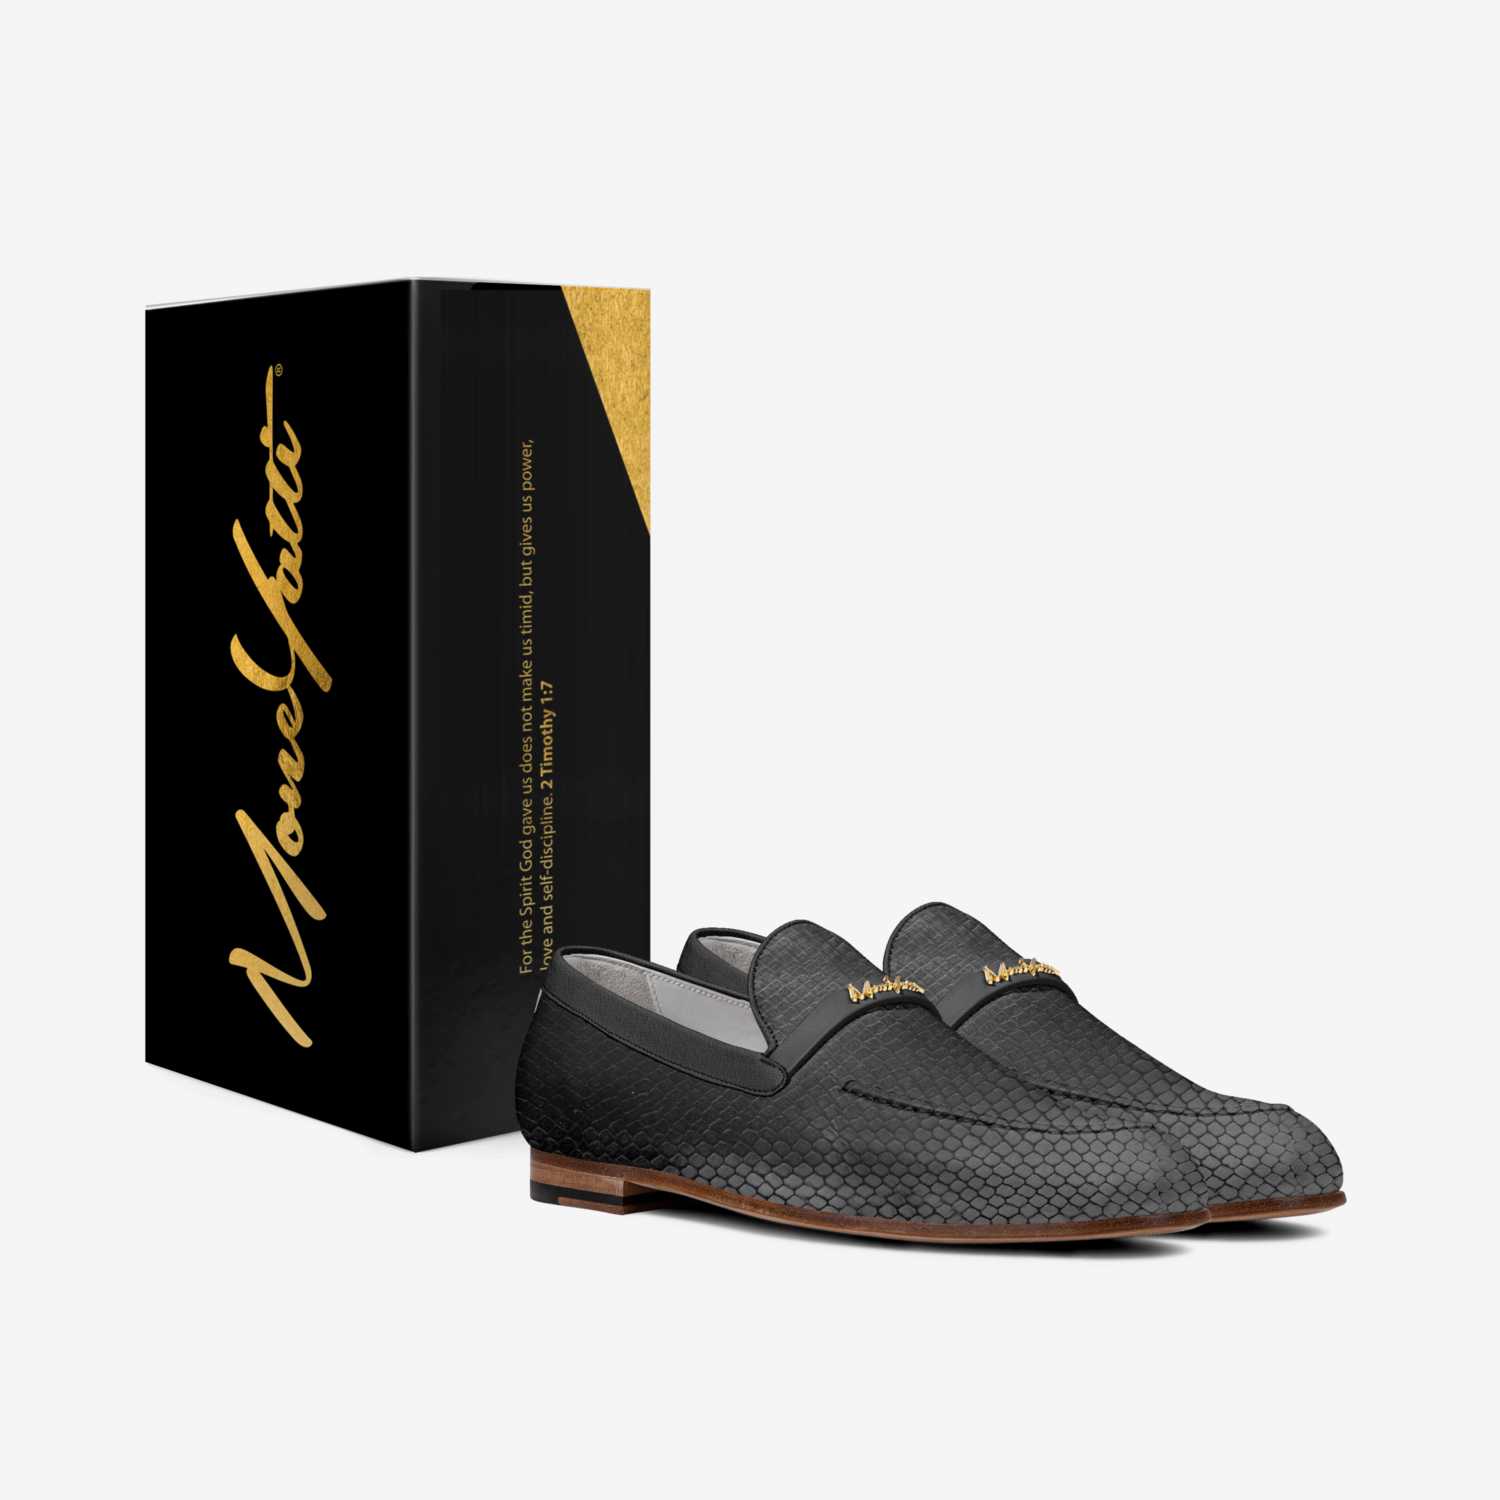 ElegantDrip 002 custom made in Italy shoes by Moneyatti Brand | Box view